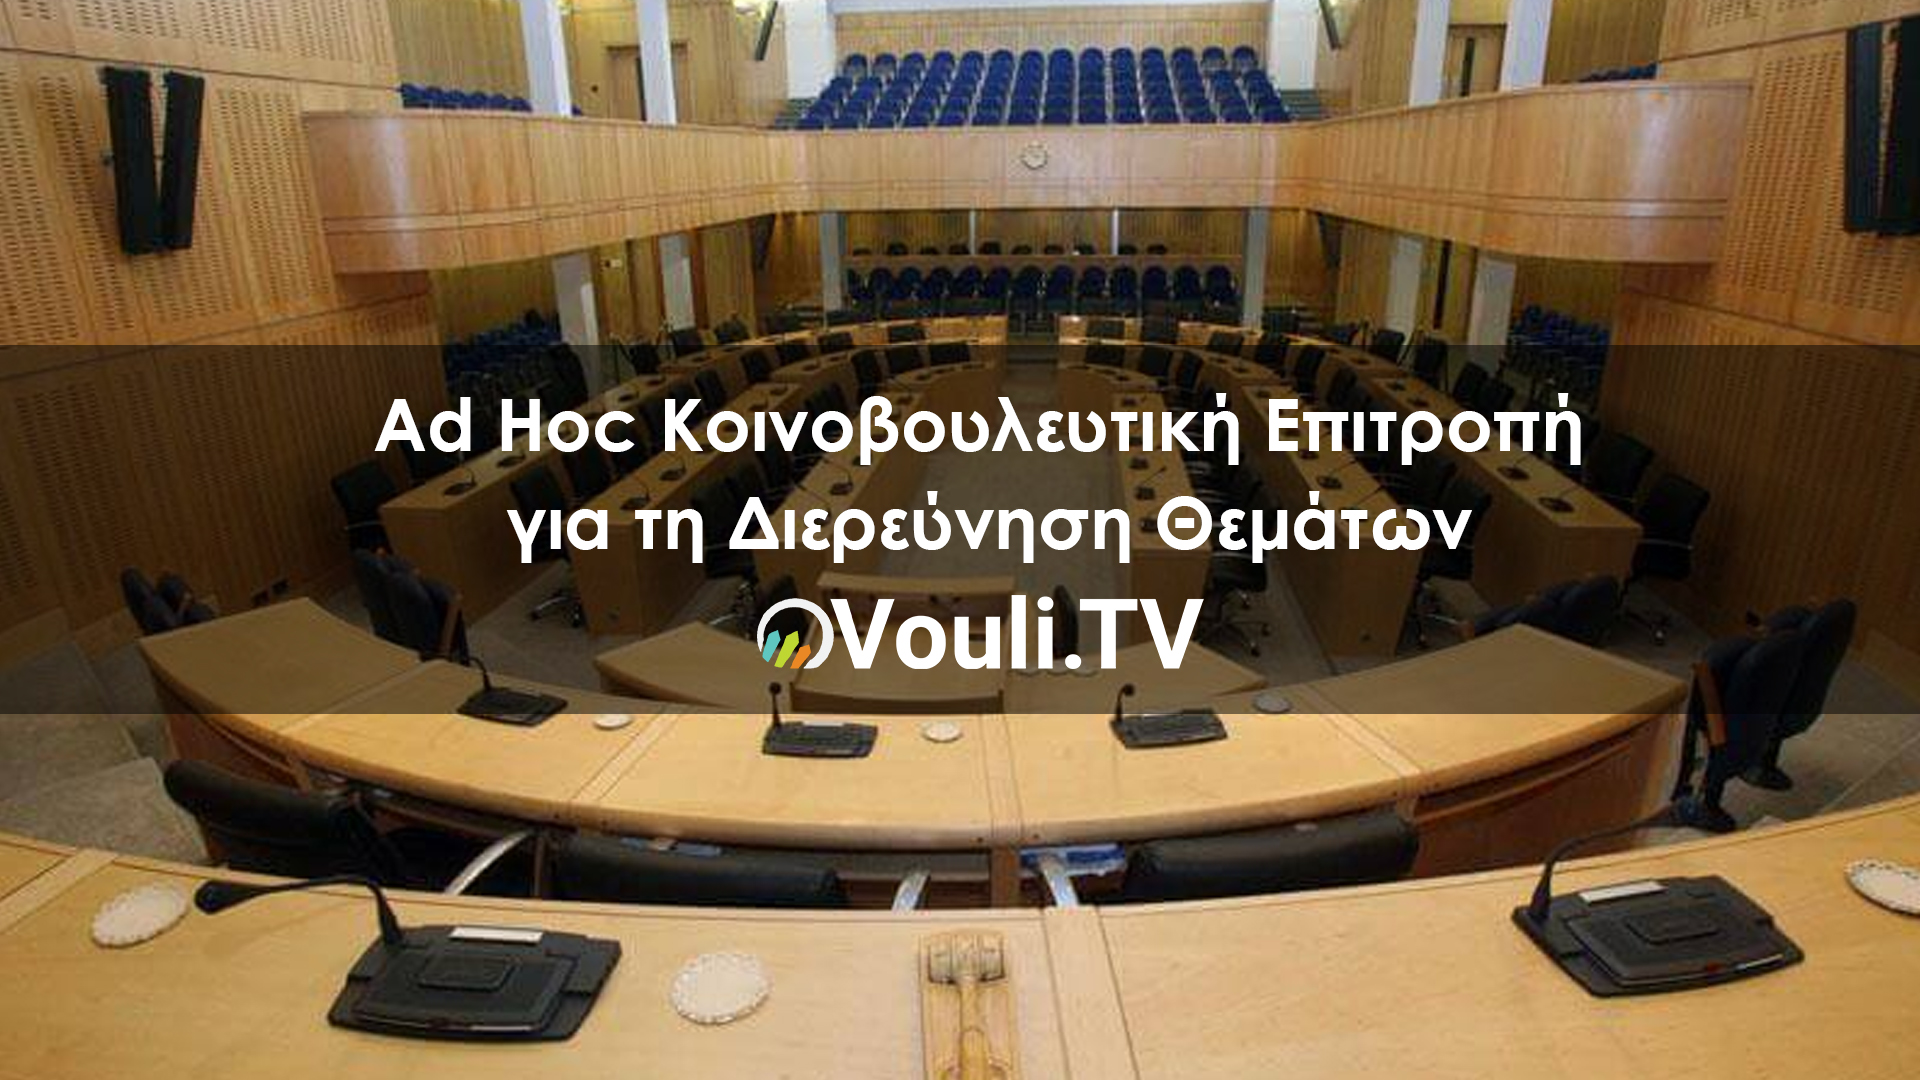 Ad Hoc Κοινοβουλευτικής Επιτροπής για τη Διερεύνηση Θεμάτων | Vouli report - 25/09/2020